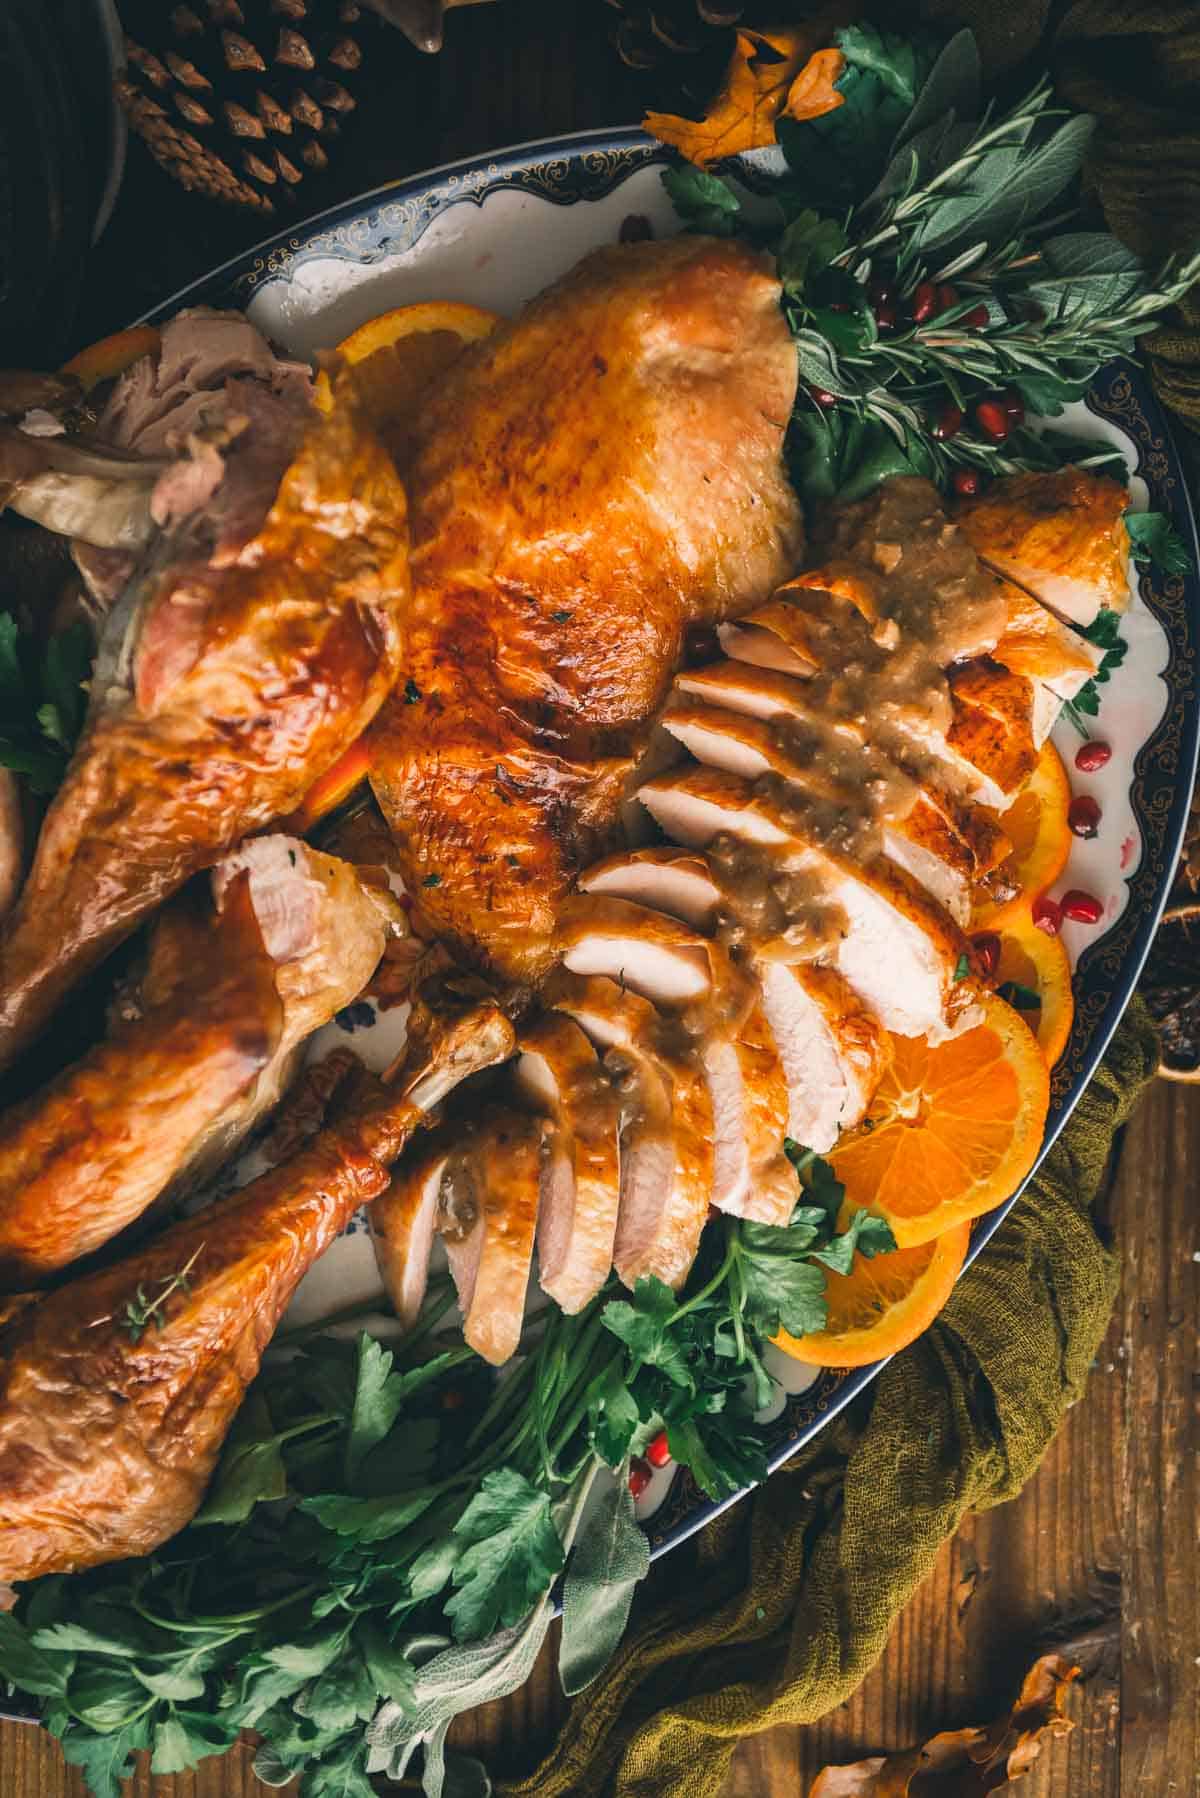 Golden brown turkey breast sliced with gravy on top.